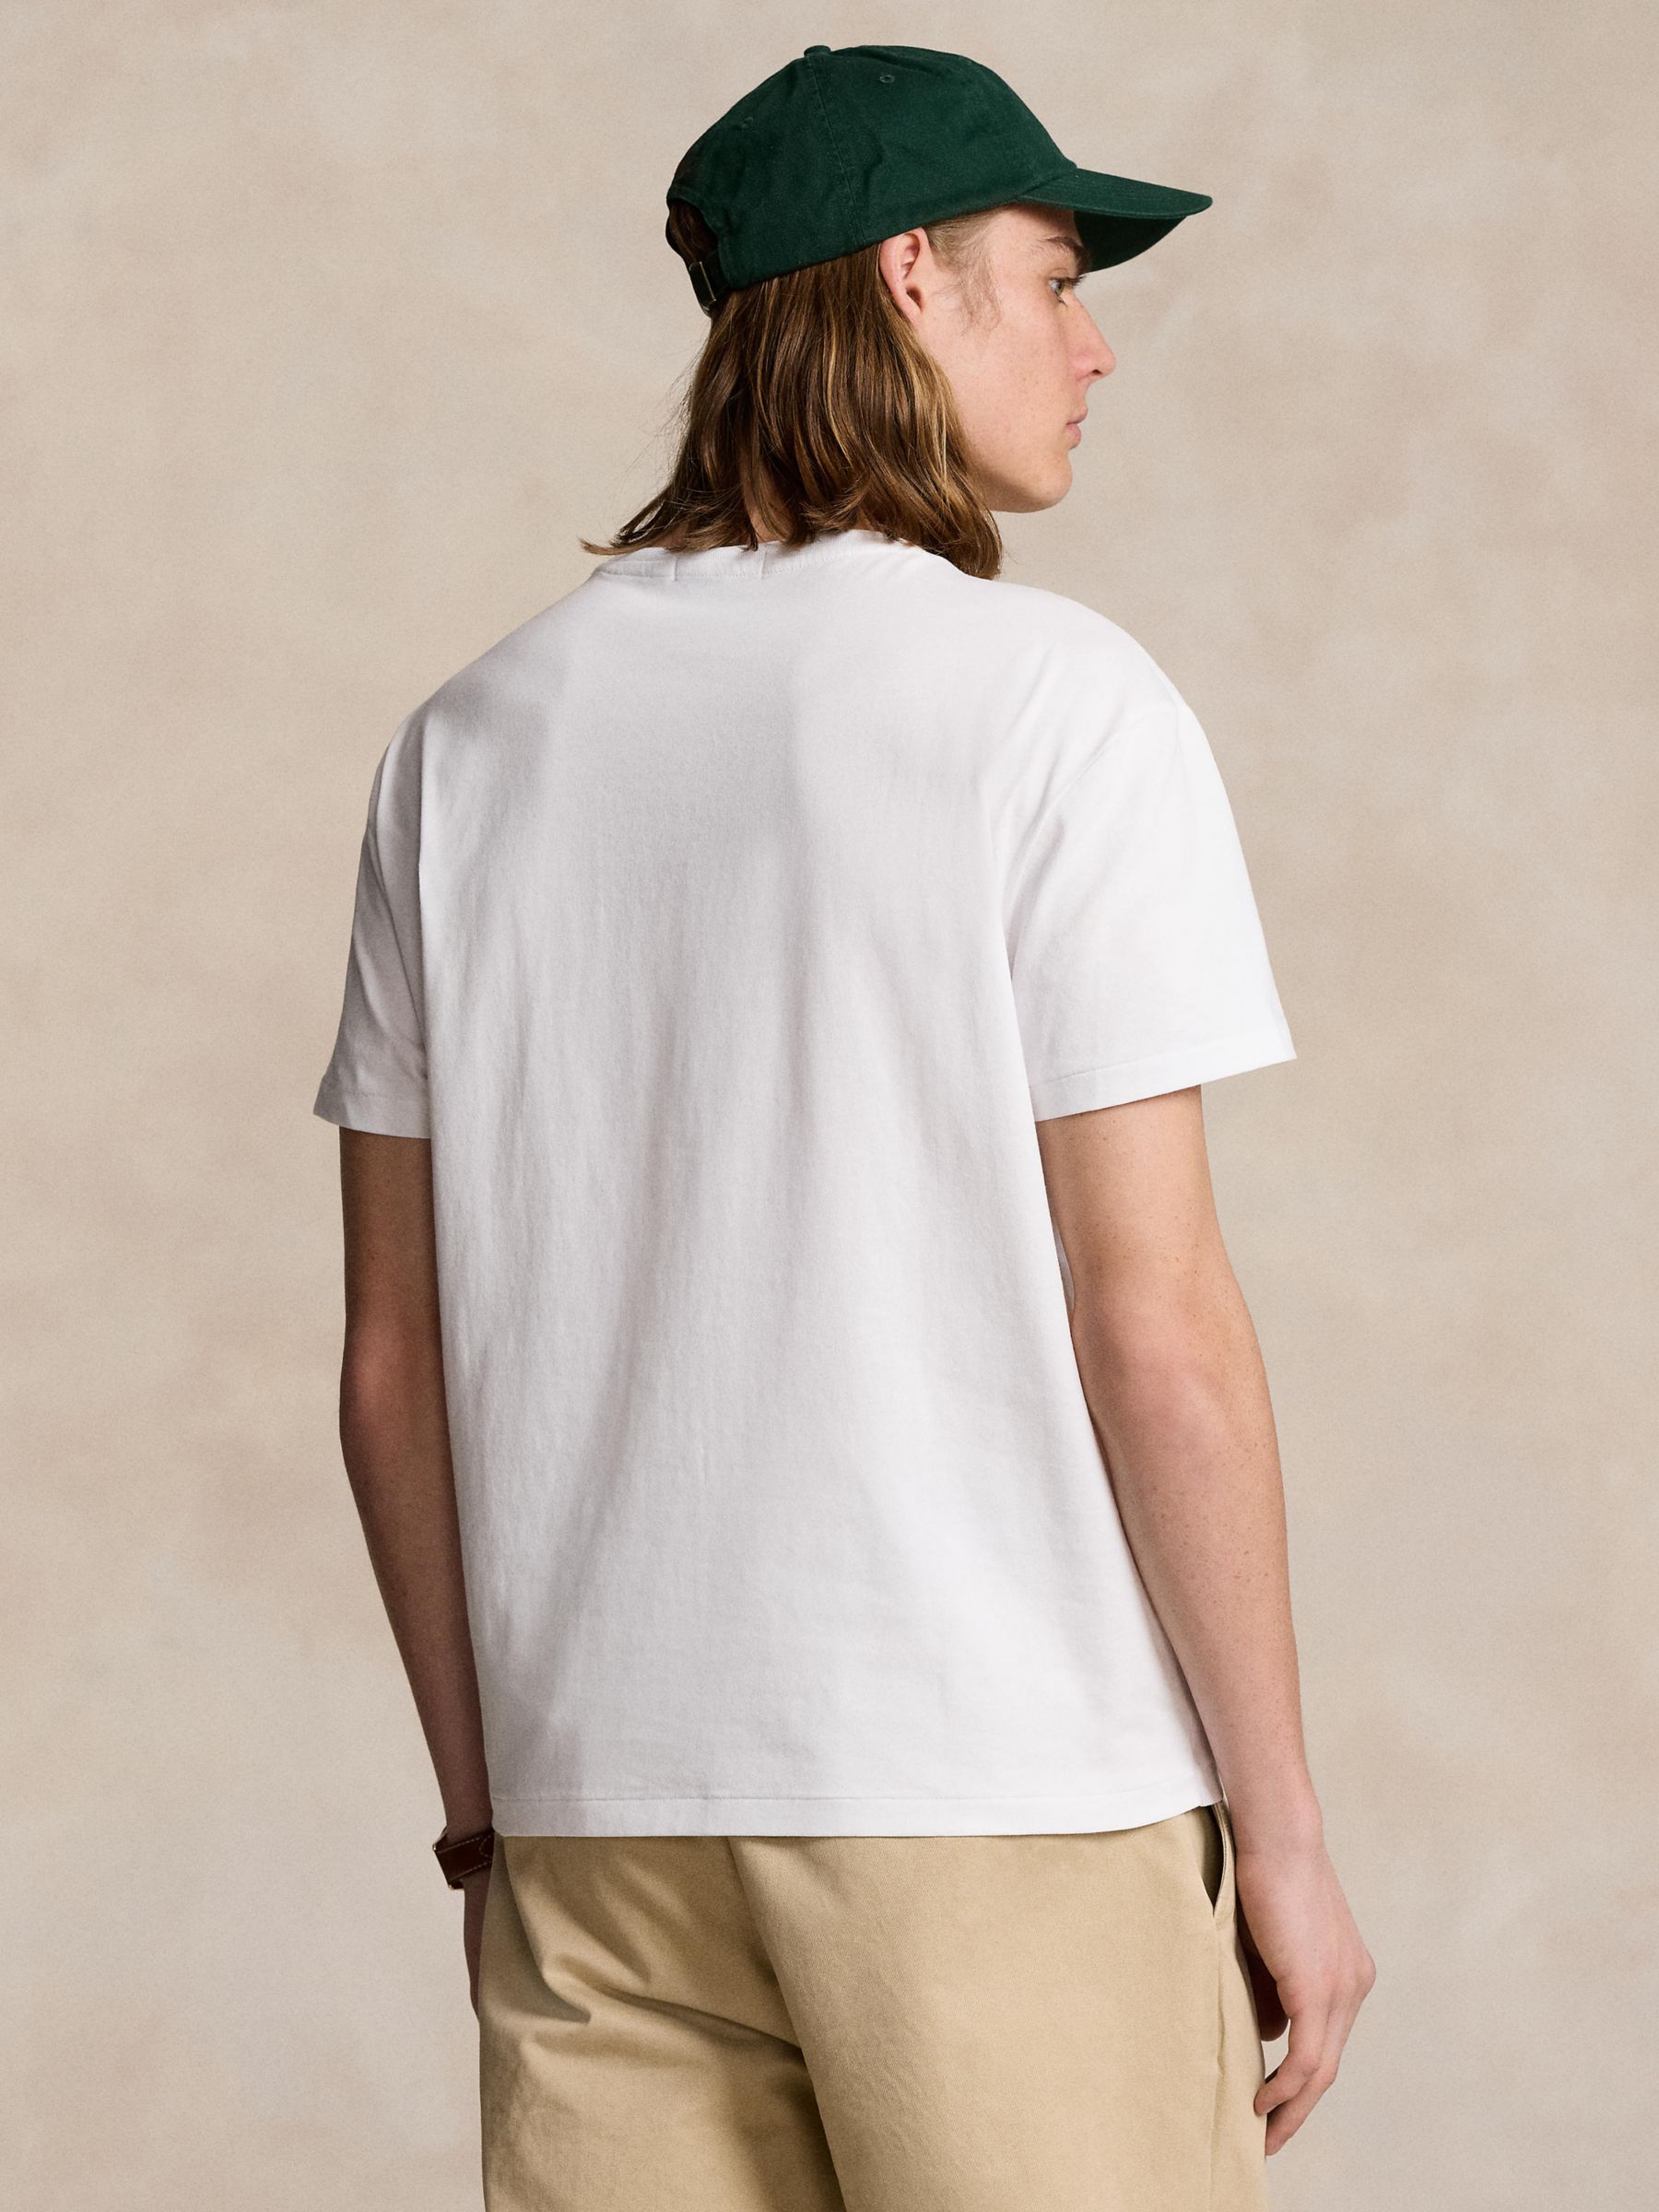 Ralph Lauren Chain Script T-Shirt, White, XXL